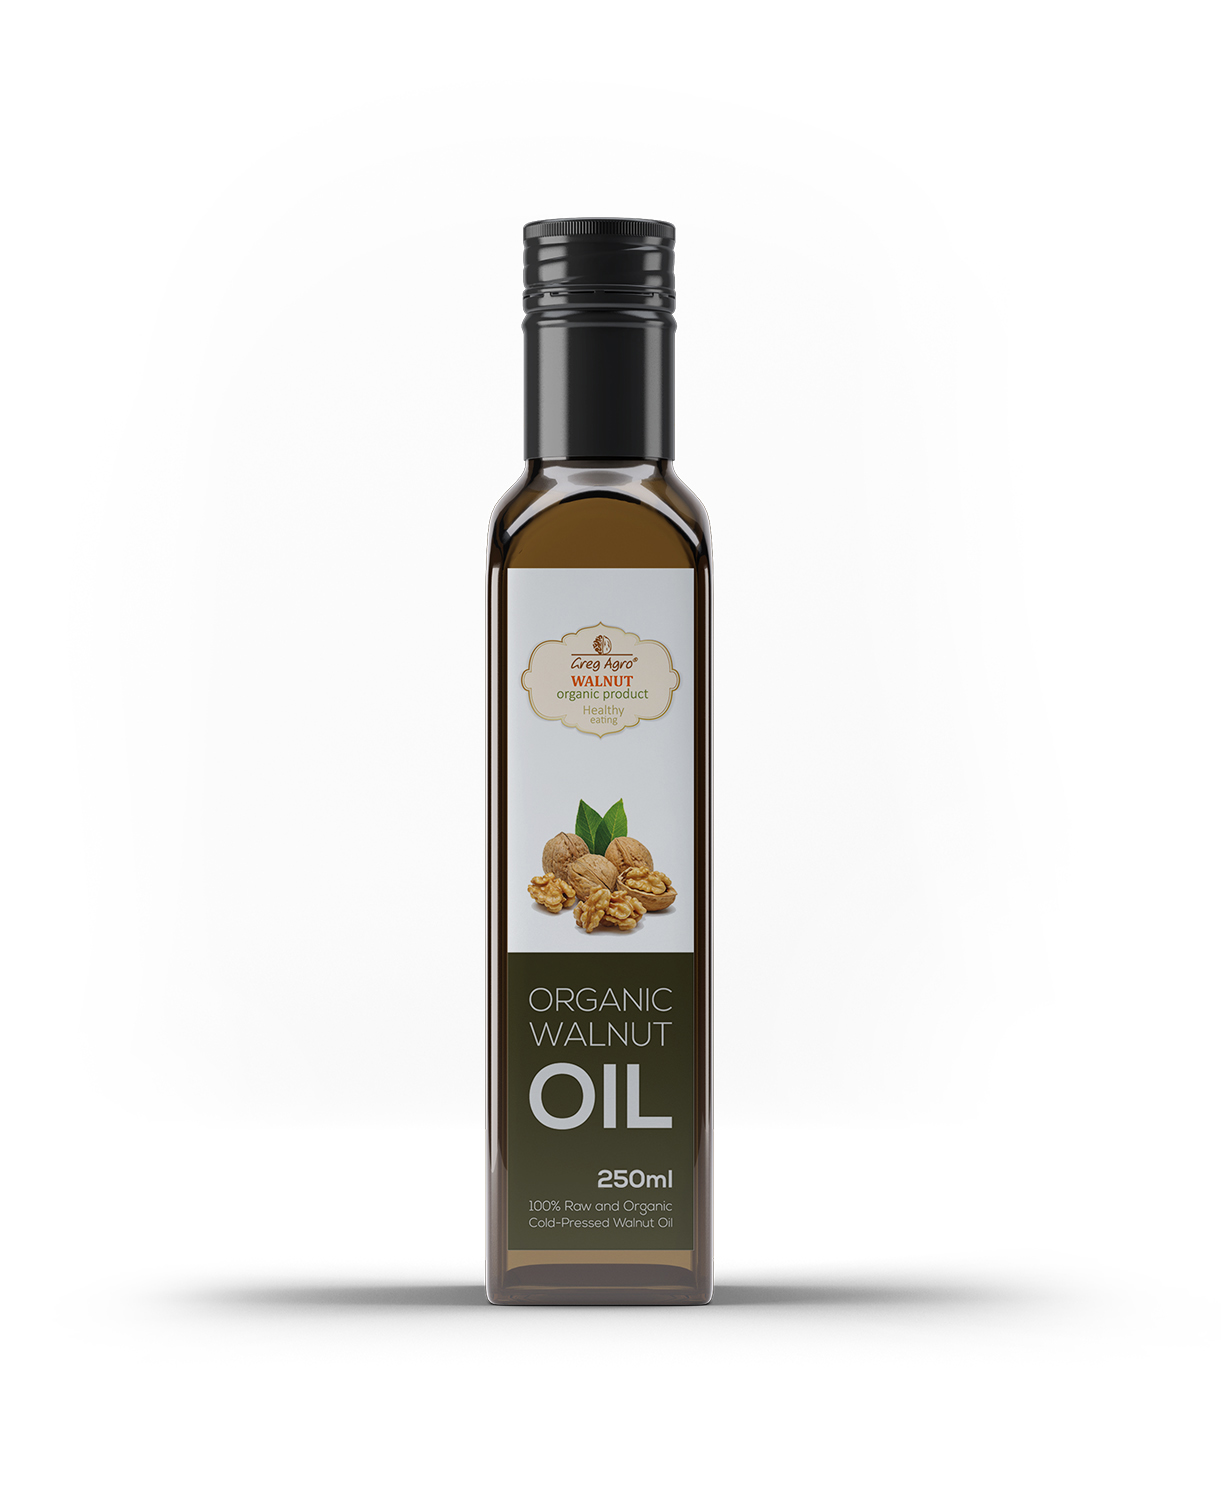 Buy Walnut Oil 250ml, Newcastle upon Tyne, Alnwick, Gateshead, United Kingdom, England, Scotland, gregagro.co.uk